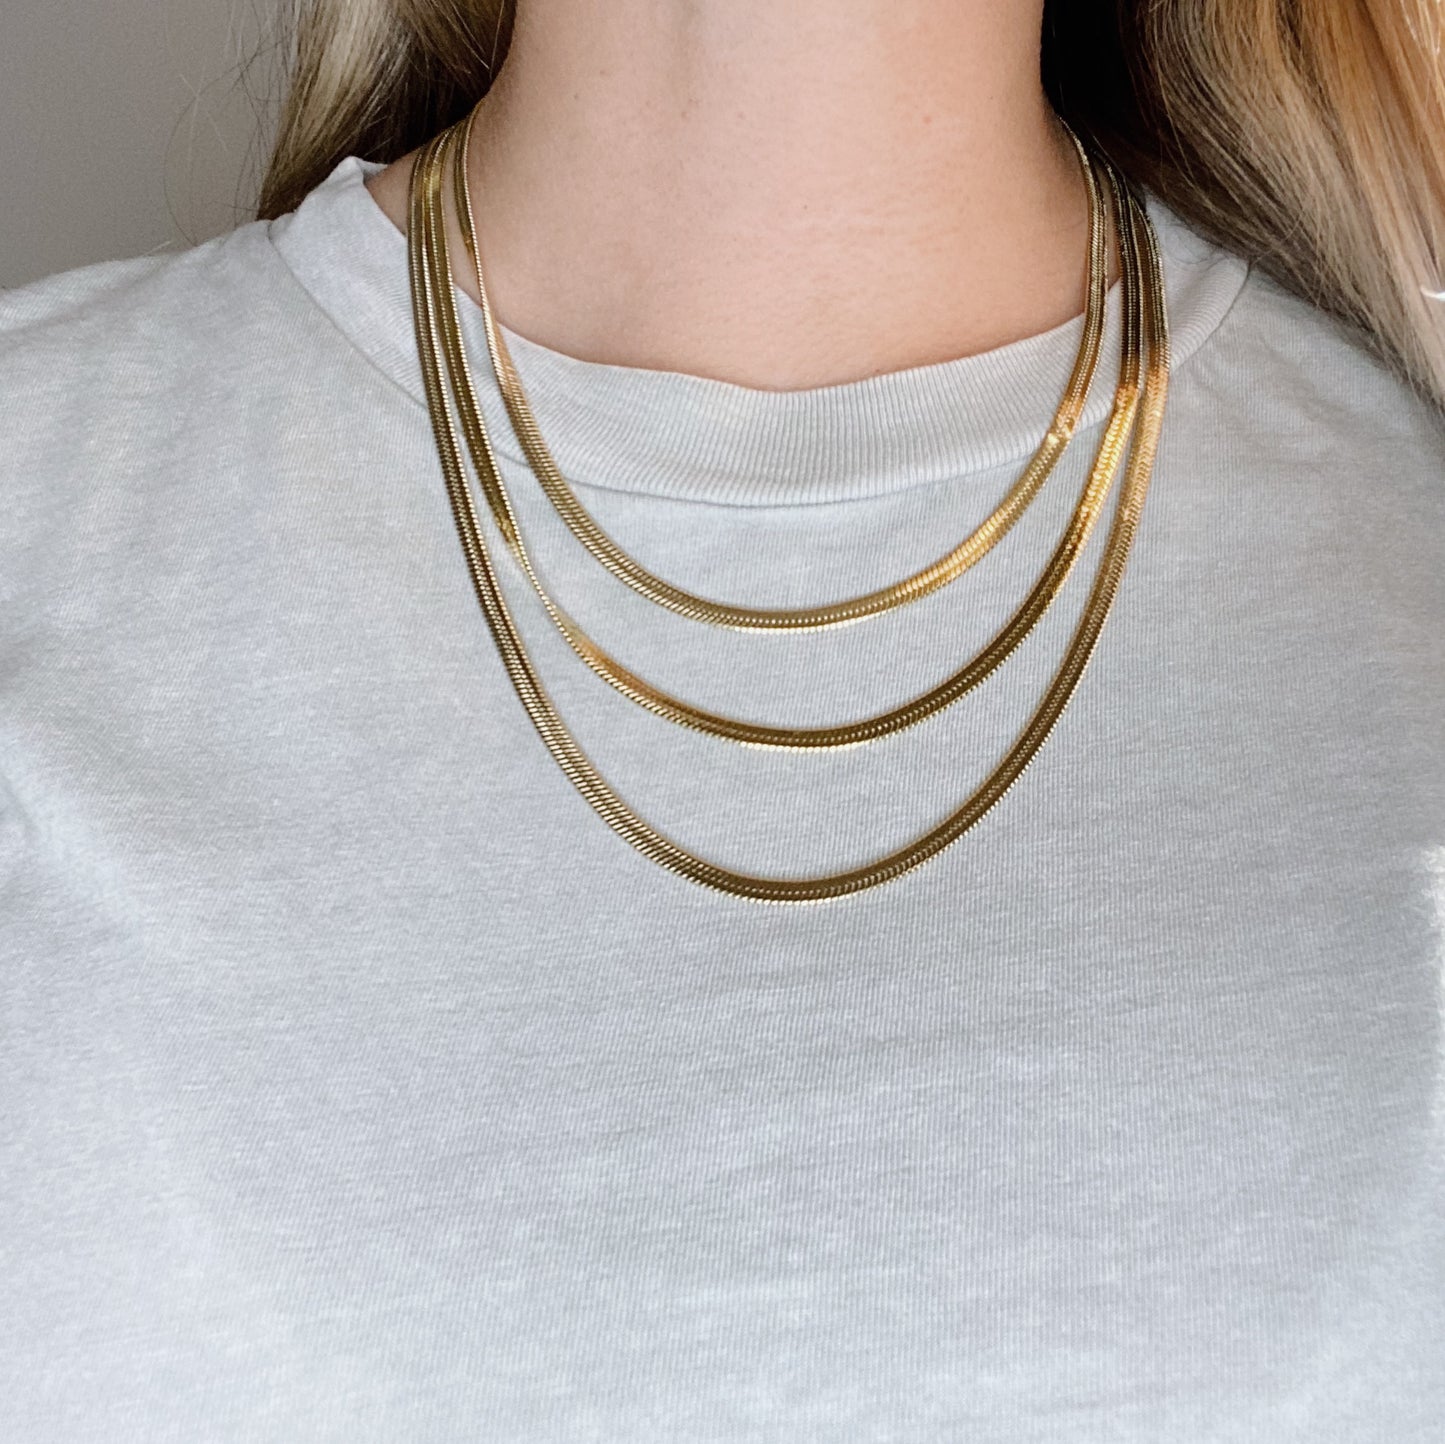 Herringbone Necklace, gold-plated 18K. ISVI Boutique, Miami